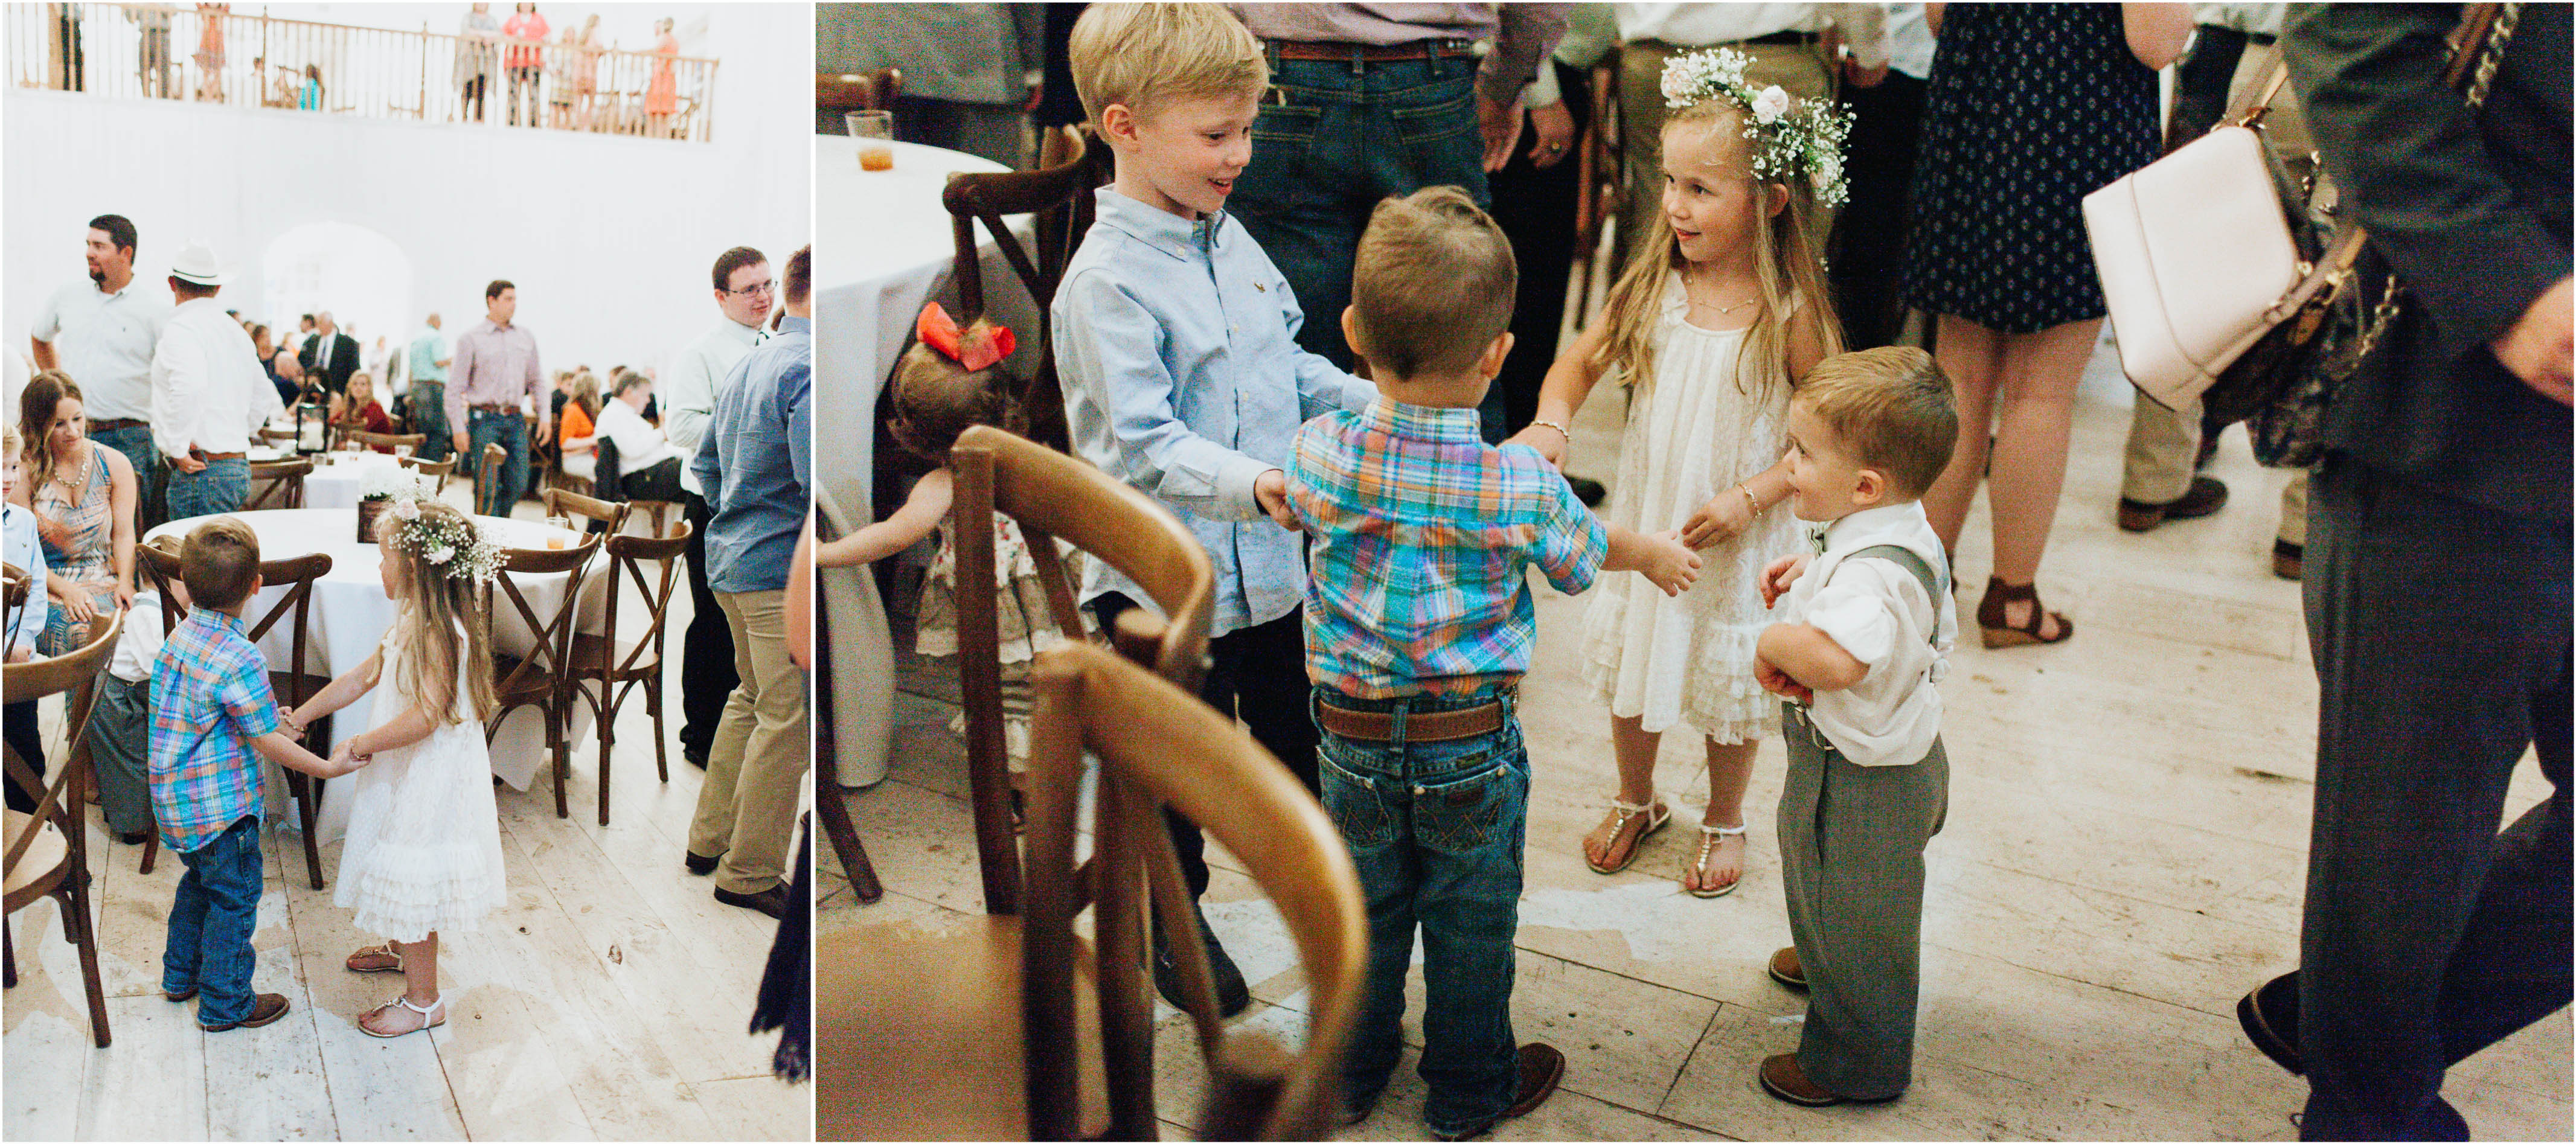 Toni + Justin | The White Sparrow Barn Wedding | Quinlan, TX | T